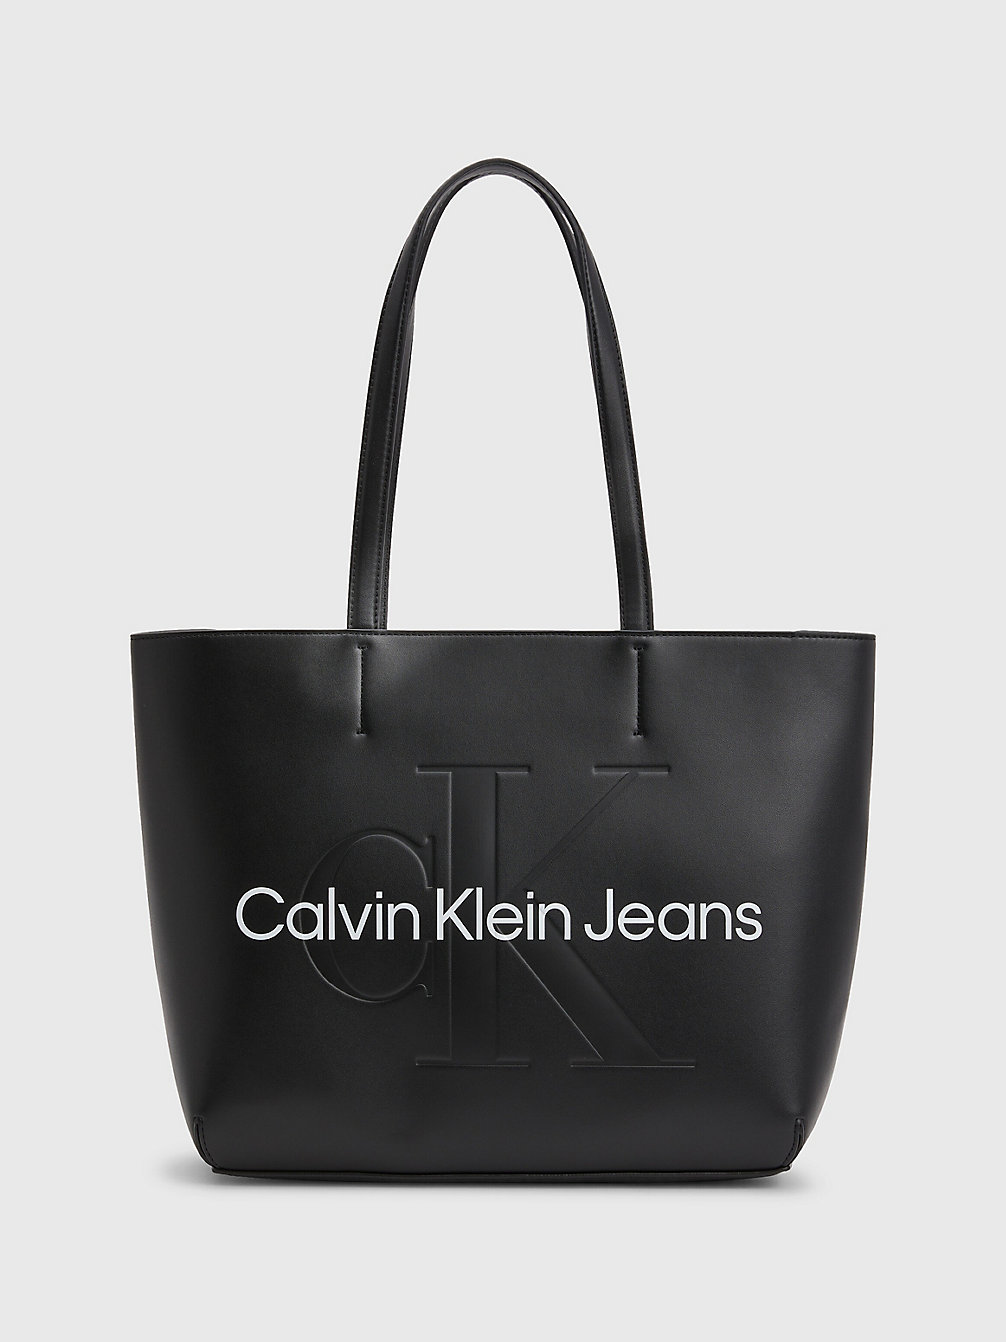 BLACK > Tote-Bag > undefined Damen - Calvin Klein